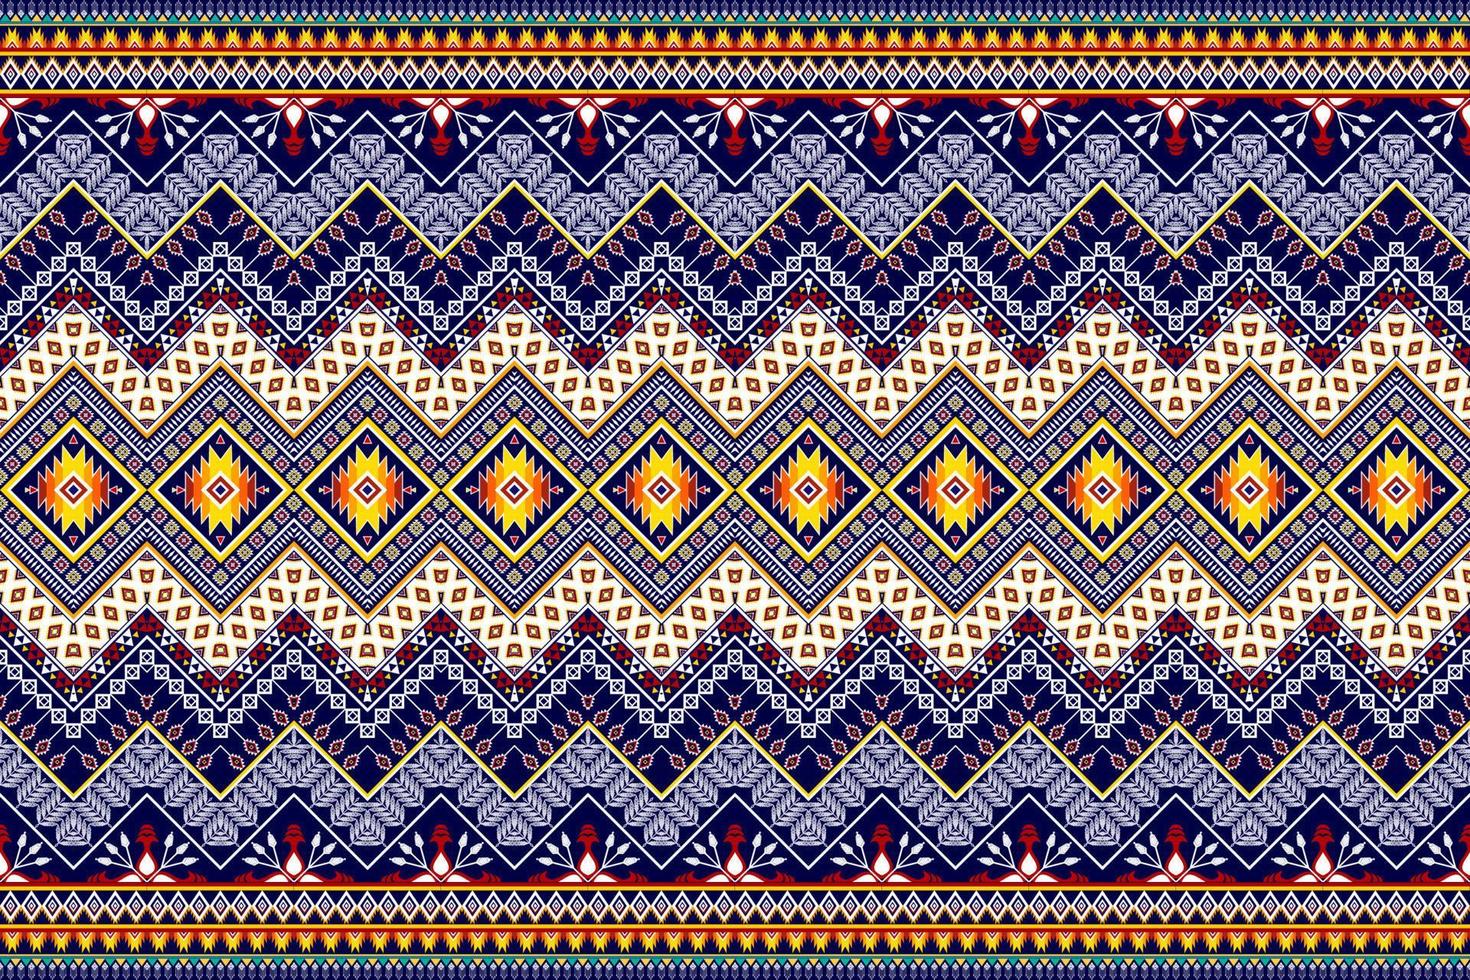 diseño de patrones étnicos geométricos abstractos. tela azteca alfombra mandala ornamento étnico chevron textil decoración papel tapiz. Fondo de vector de bordado tradicional étnico nativo boho tribal